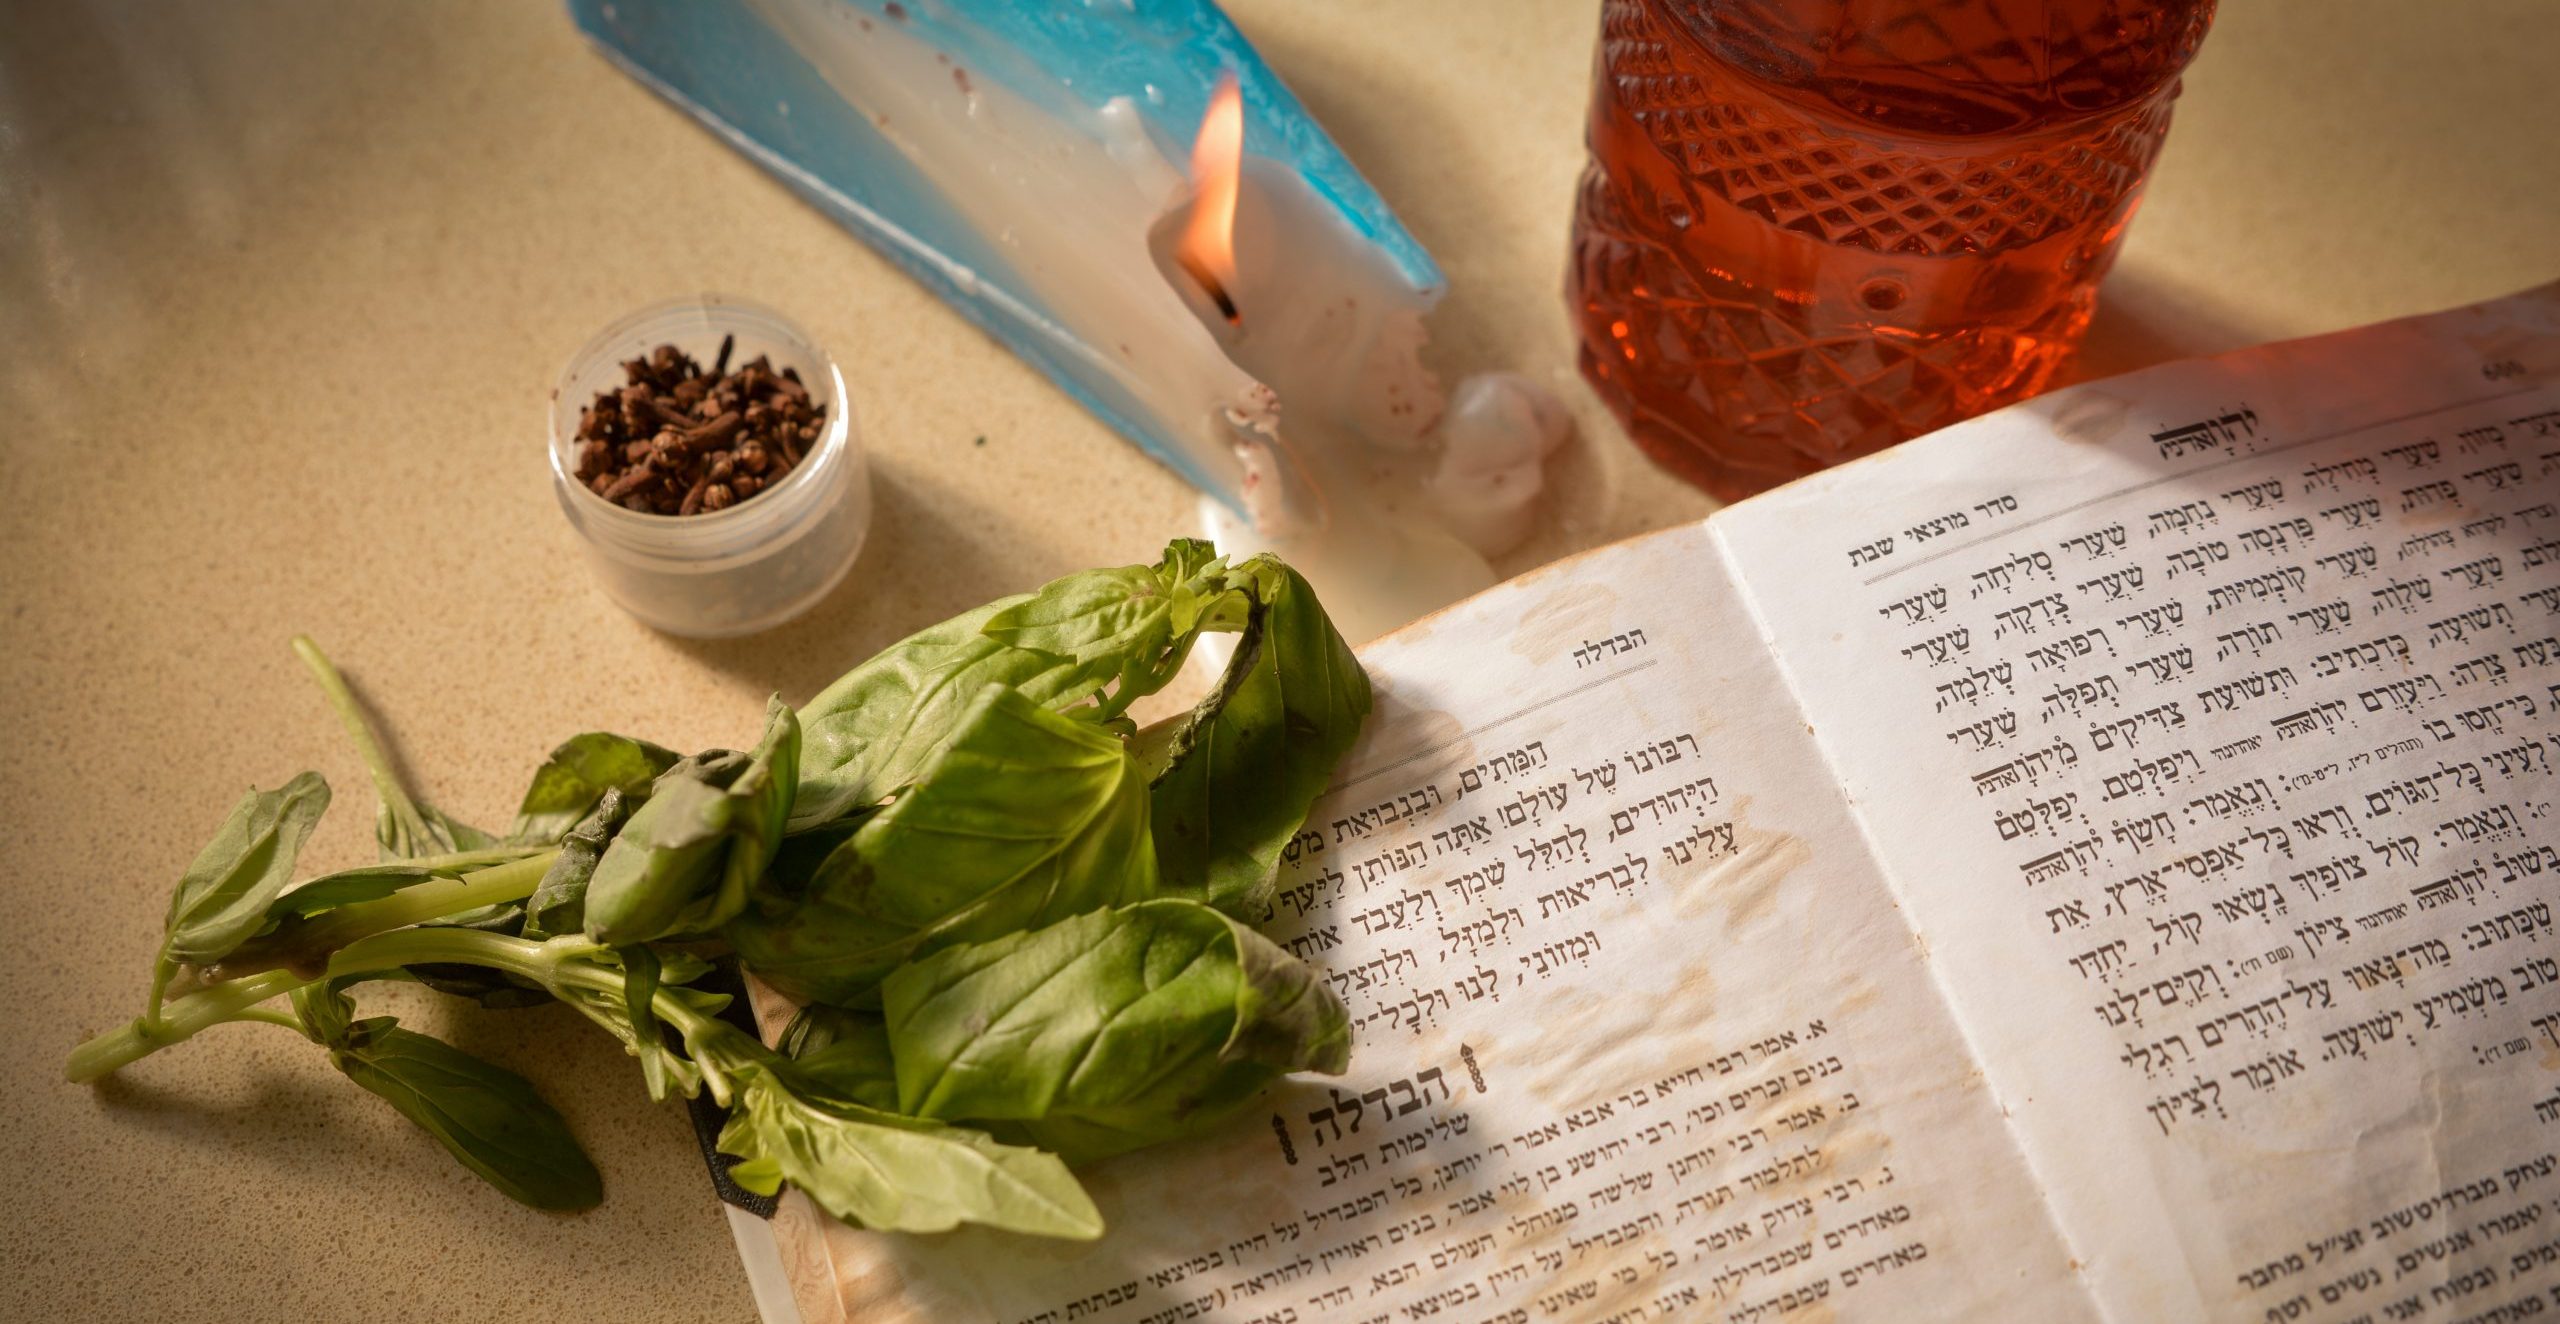 "Havdalah" When the Shabbat ends, it is a Jewish custom to light